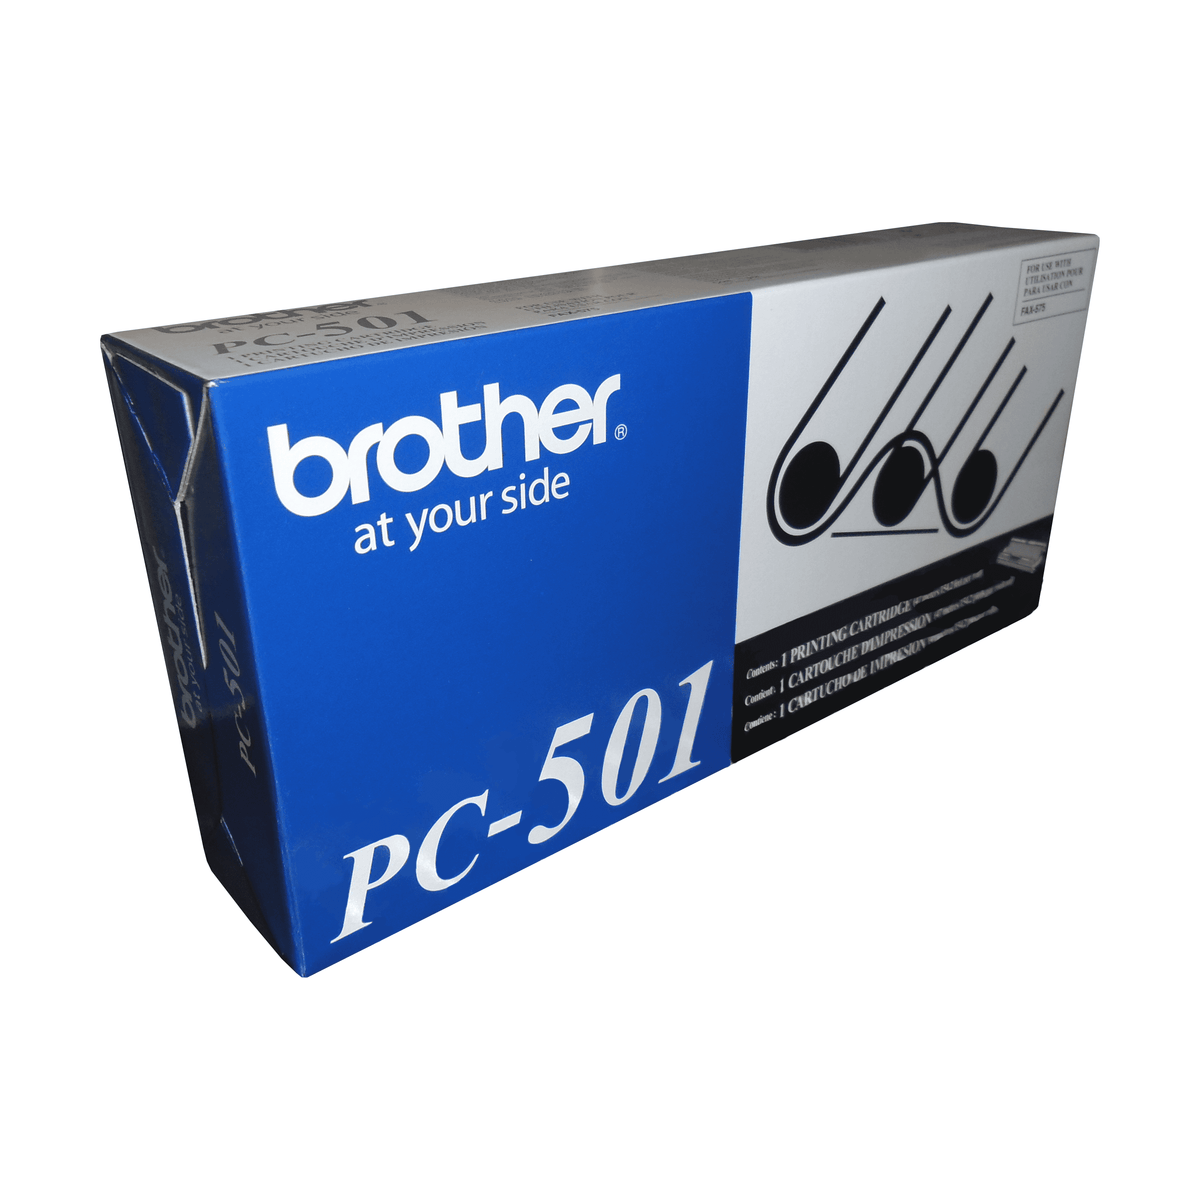 Brother PC501 Print Cartridge - toners.ca